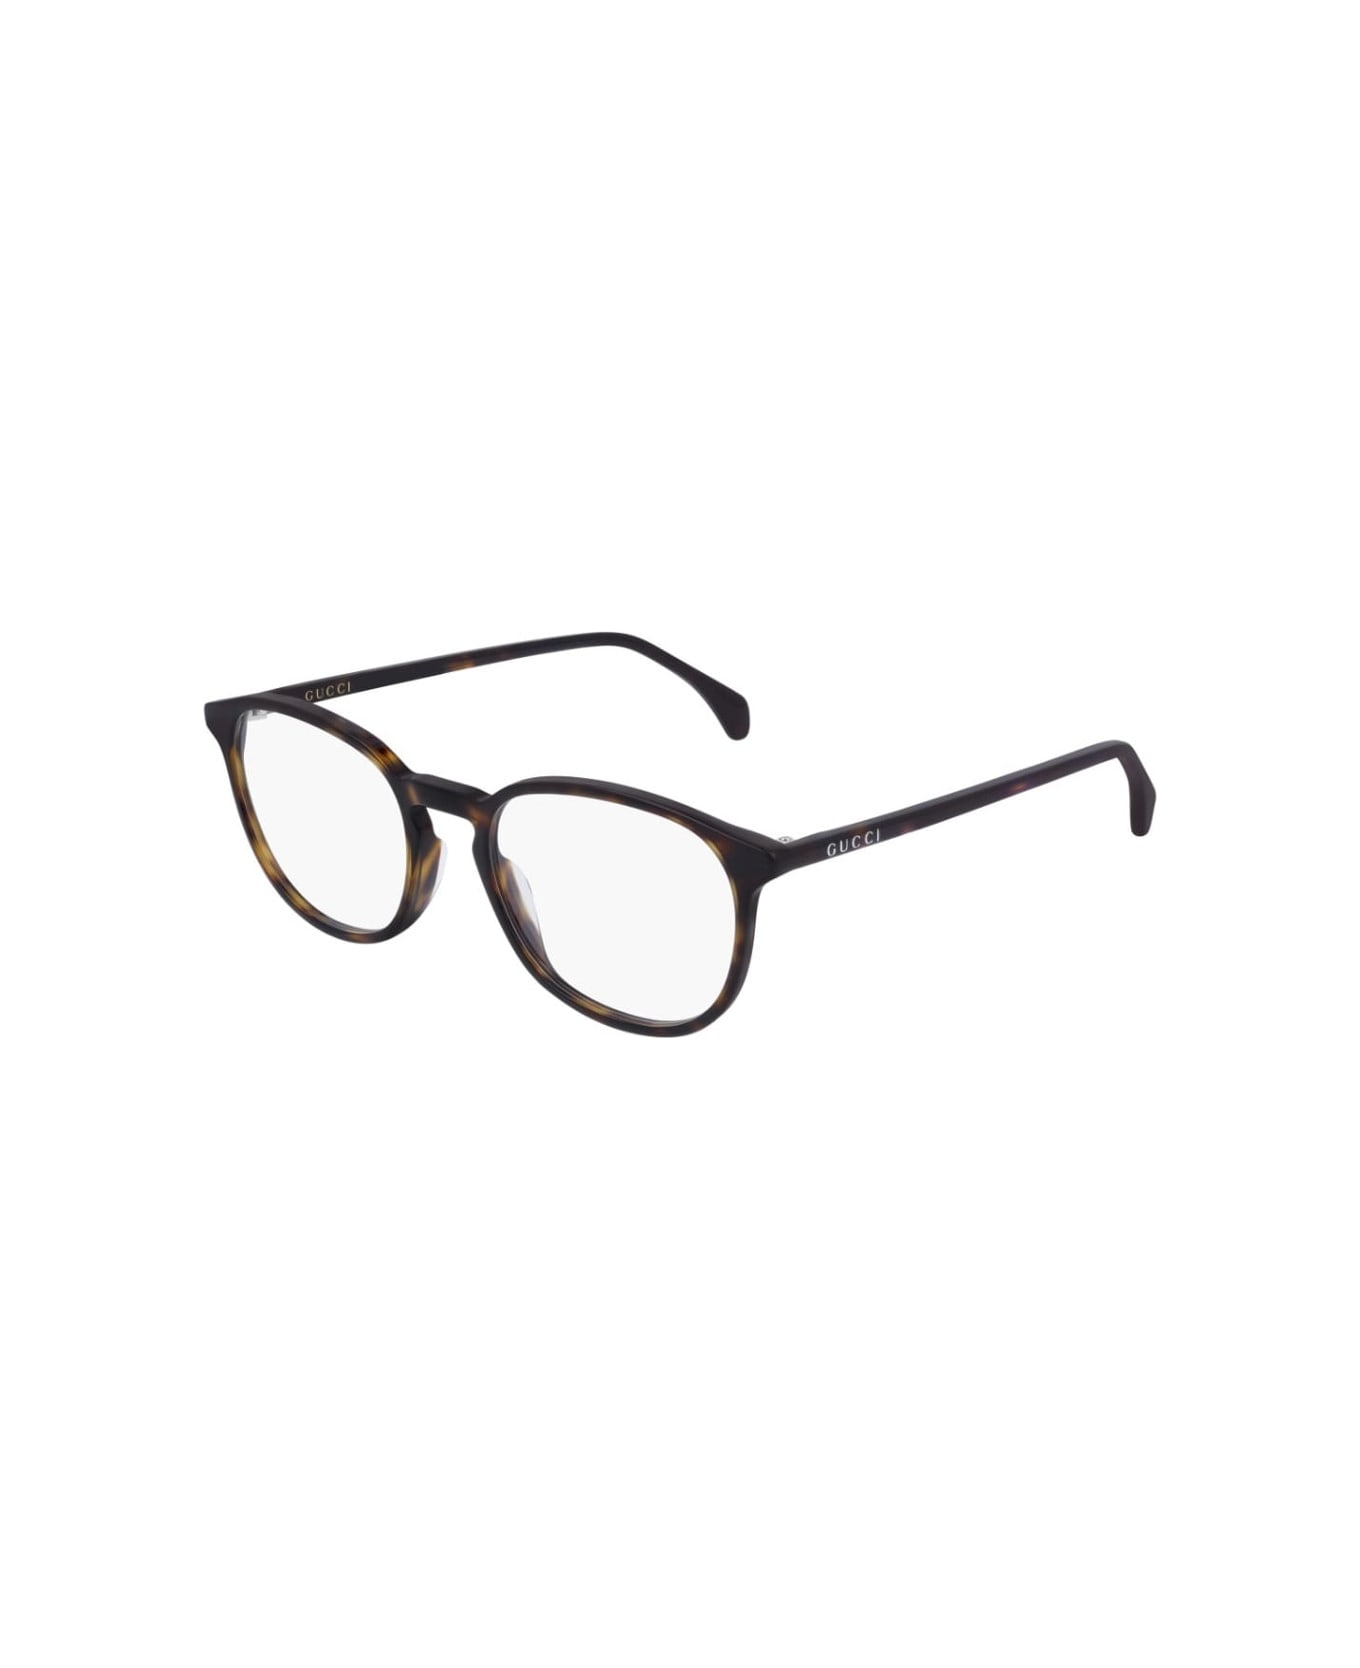 Gucci Eyewear GG0551 002 Glasses - Tartarugato アイウェア